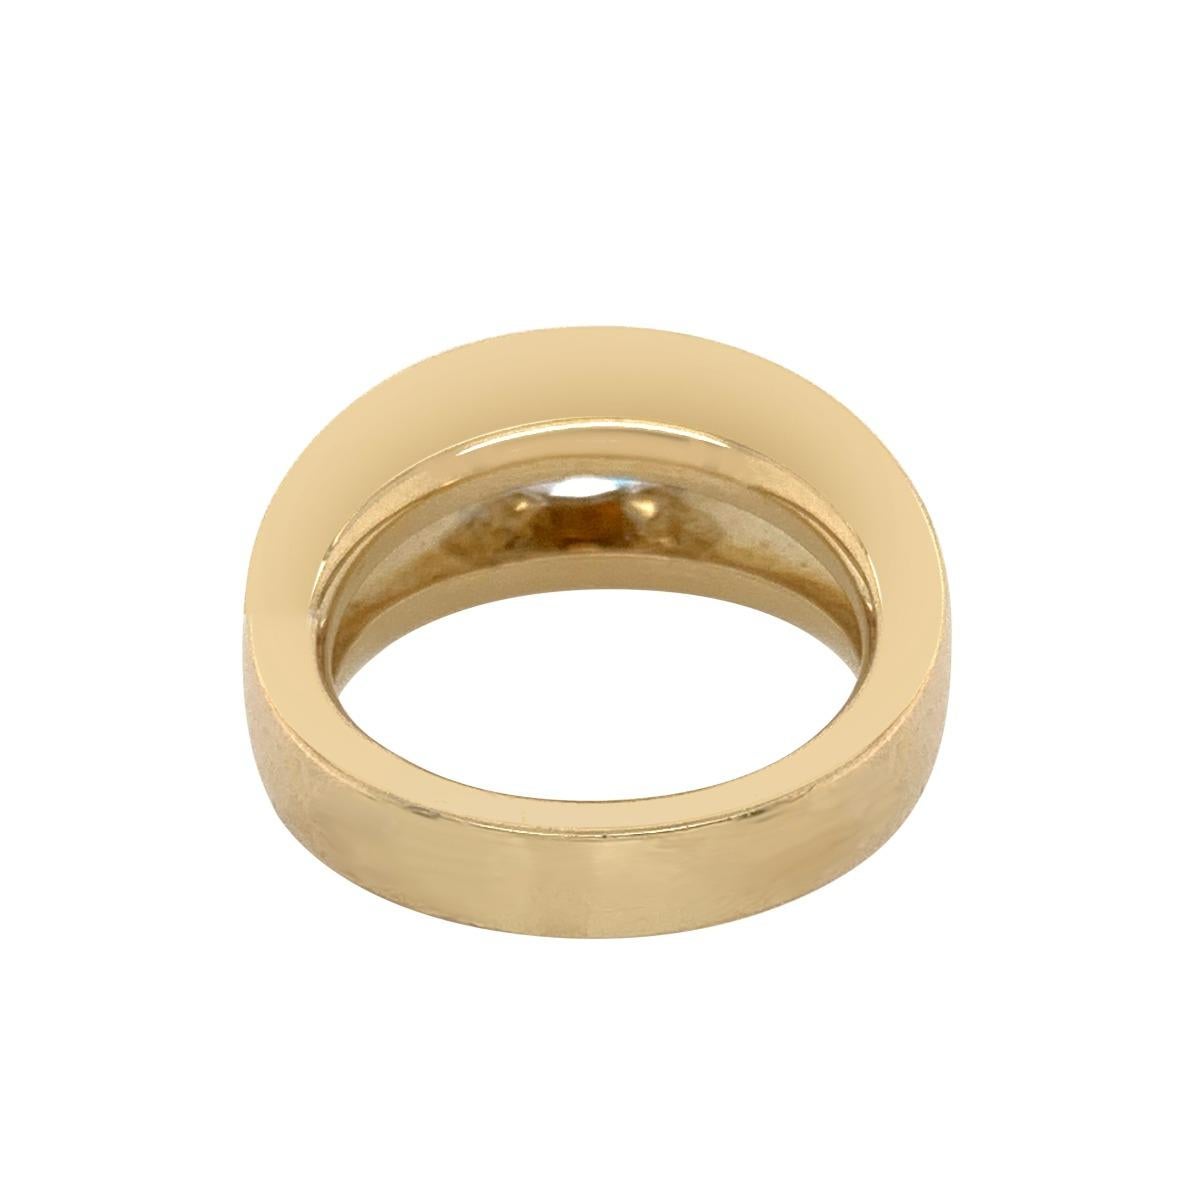 Metal: 14K Yellow Gold
Ring Size: 8
Condition: New
Gemstone: Diamond
Diamond Weight: 1.10 CT
DR1305